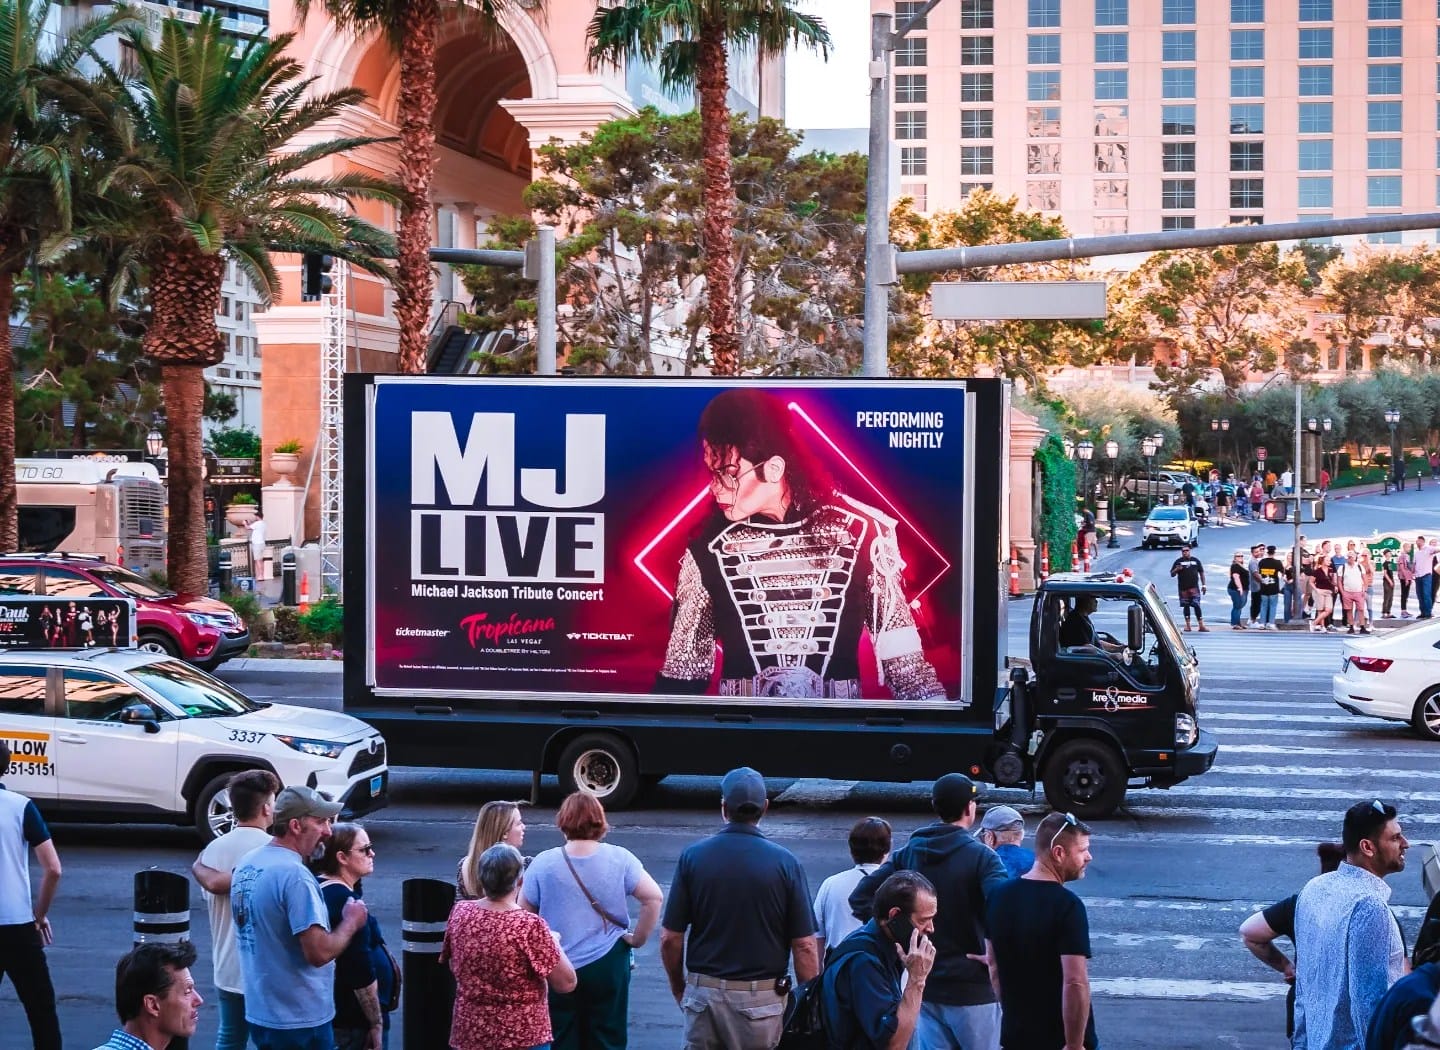 Mobile billboard promoting concert in urban setting